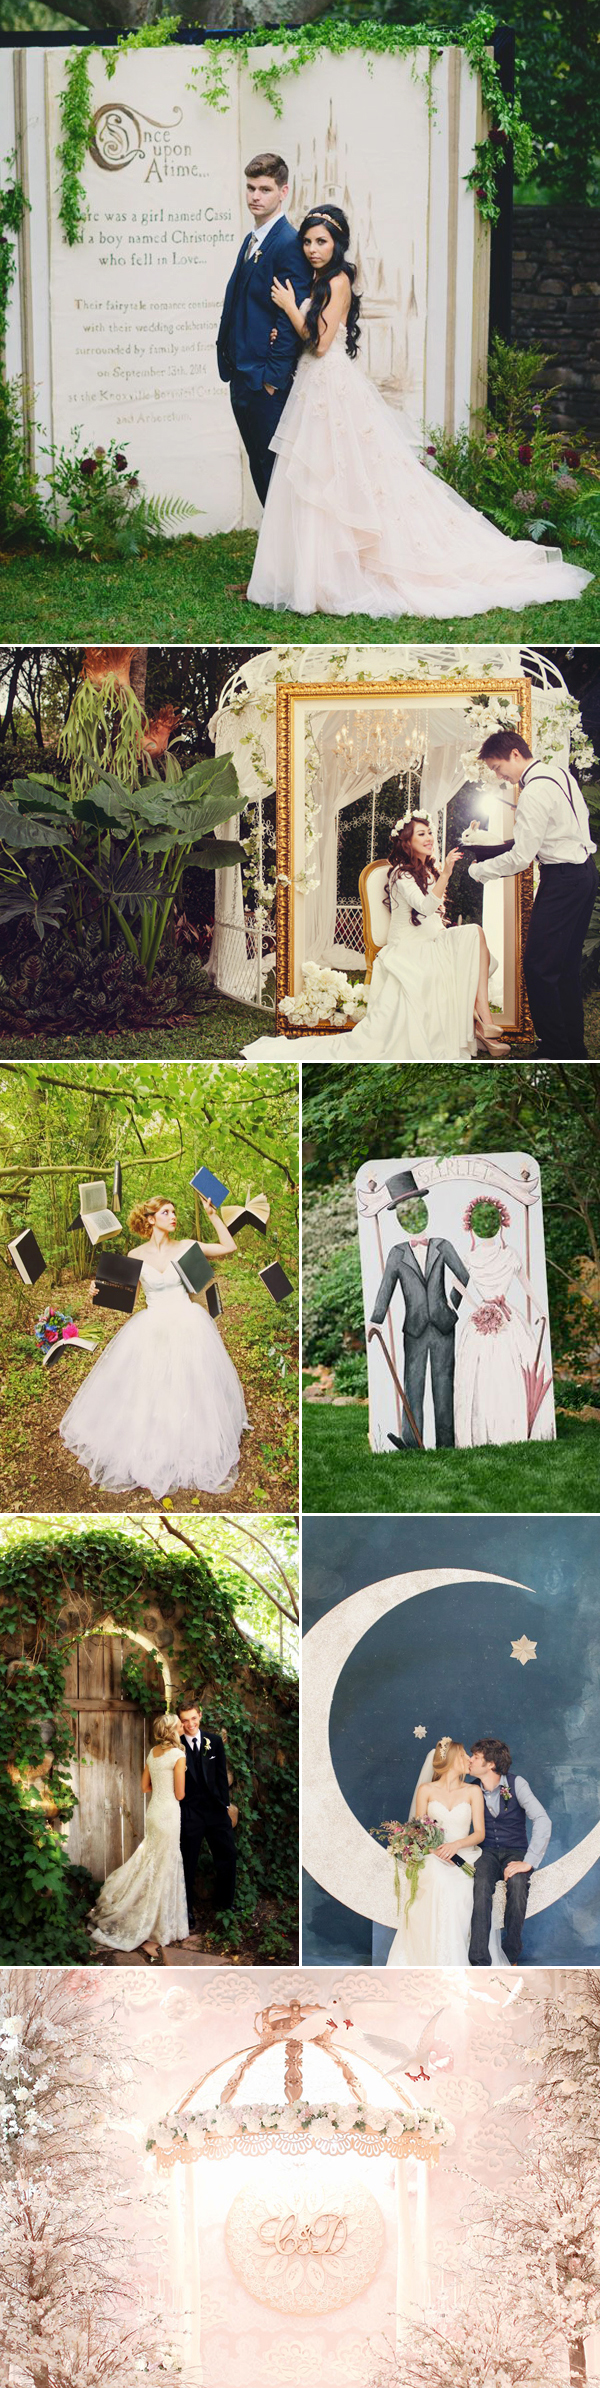 Fairytale Theme Wedding Backdrop Ideas